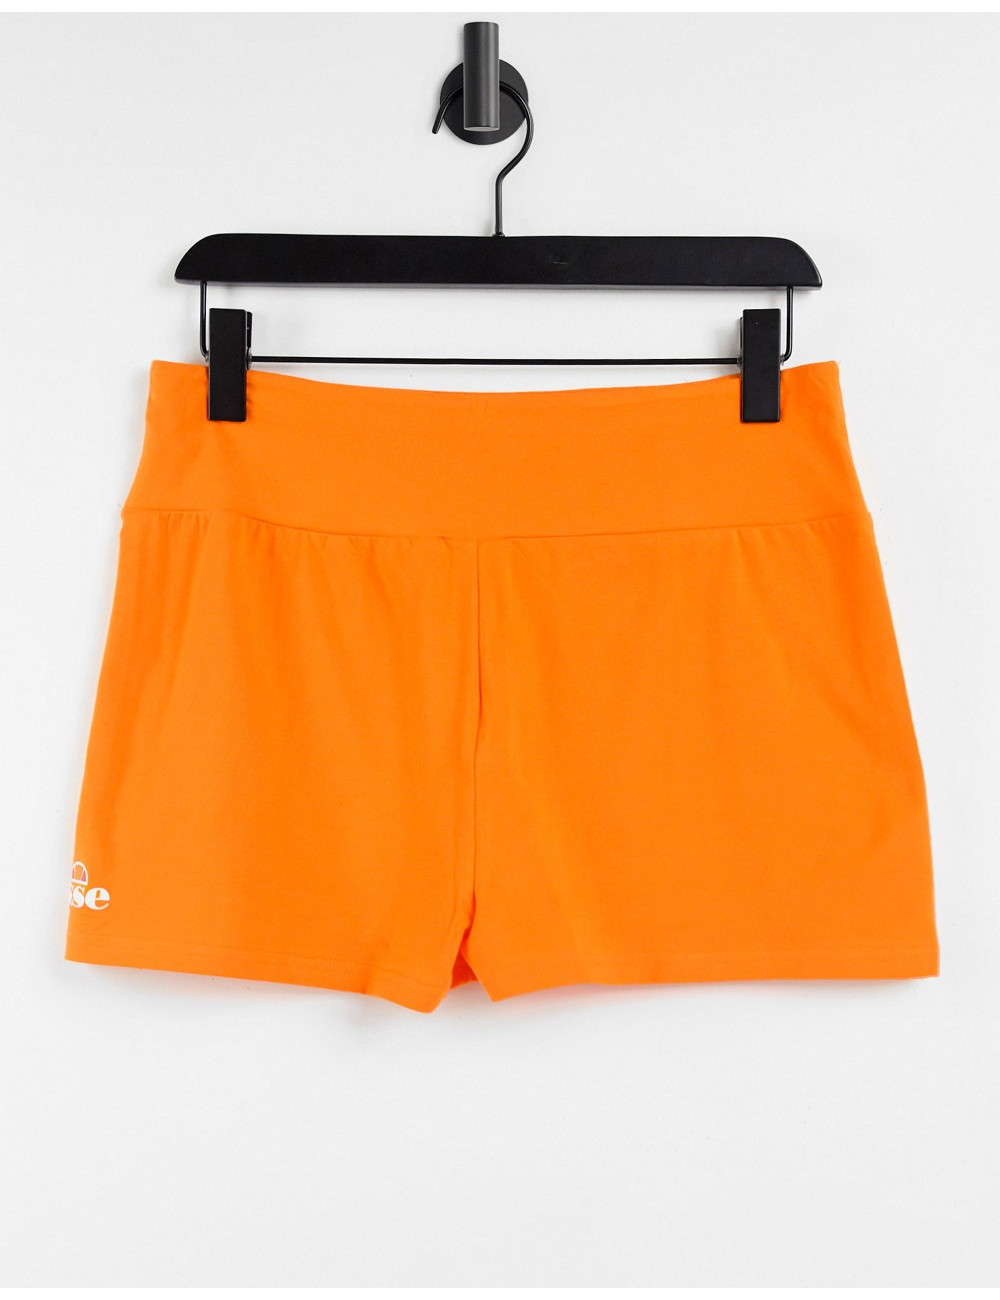 Ellesse booty shorts in orange